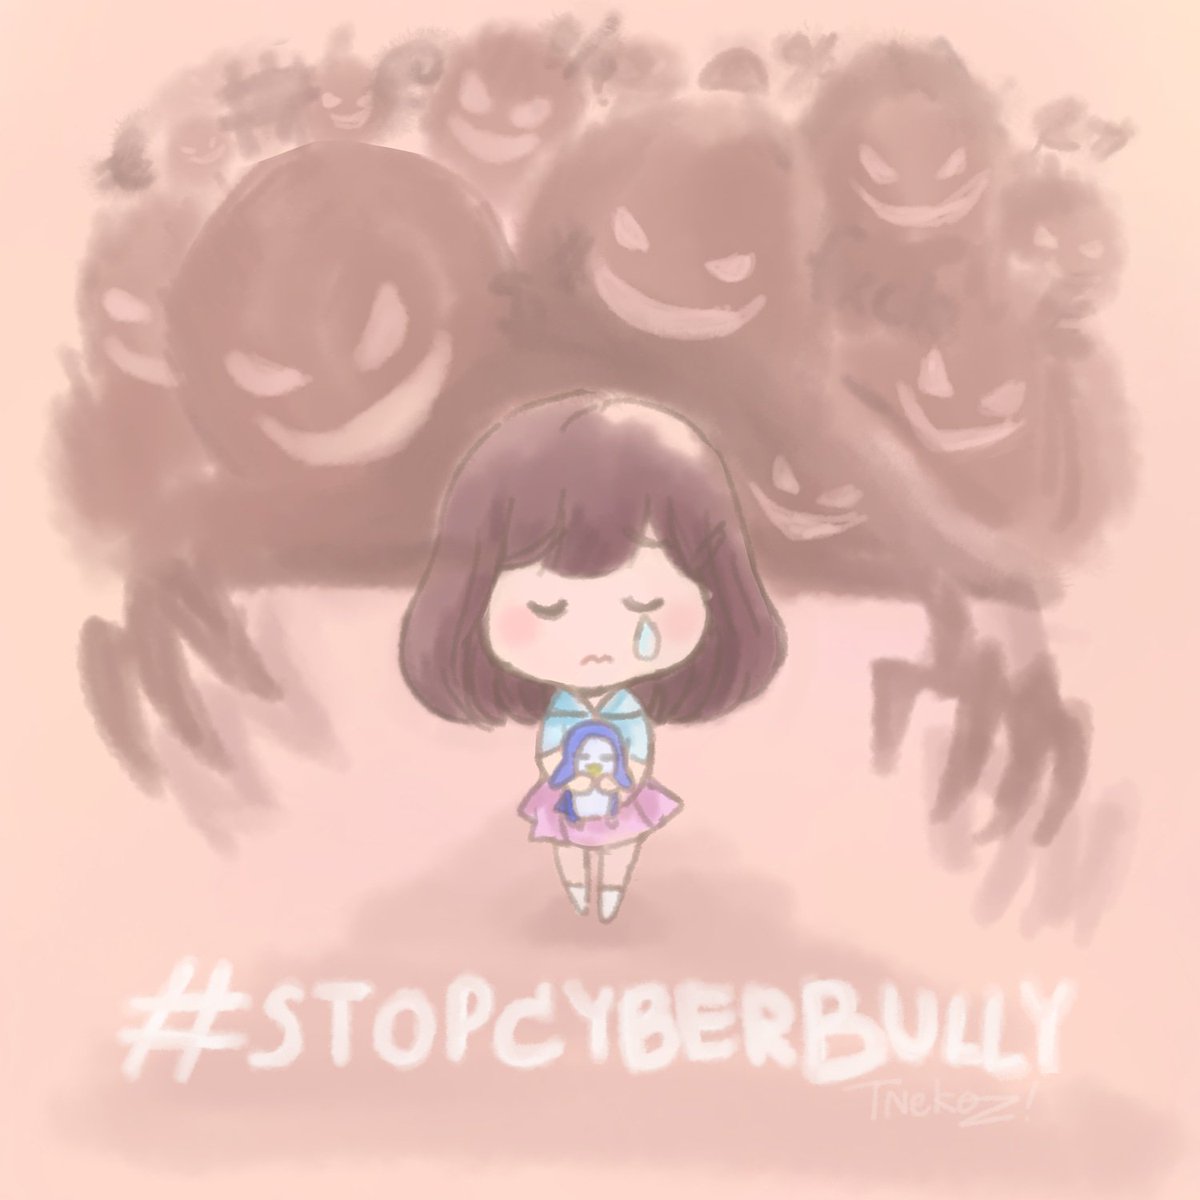 Please stop cyberbullying.
#BNK48 #RespectKaimook 
#stopcyberbully